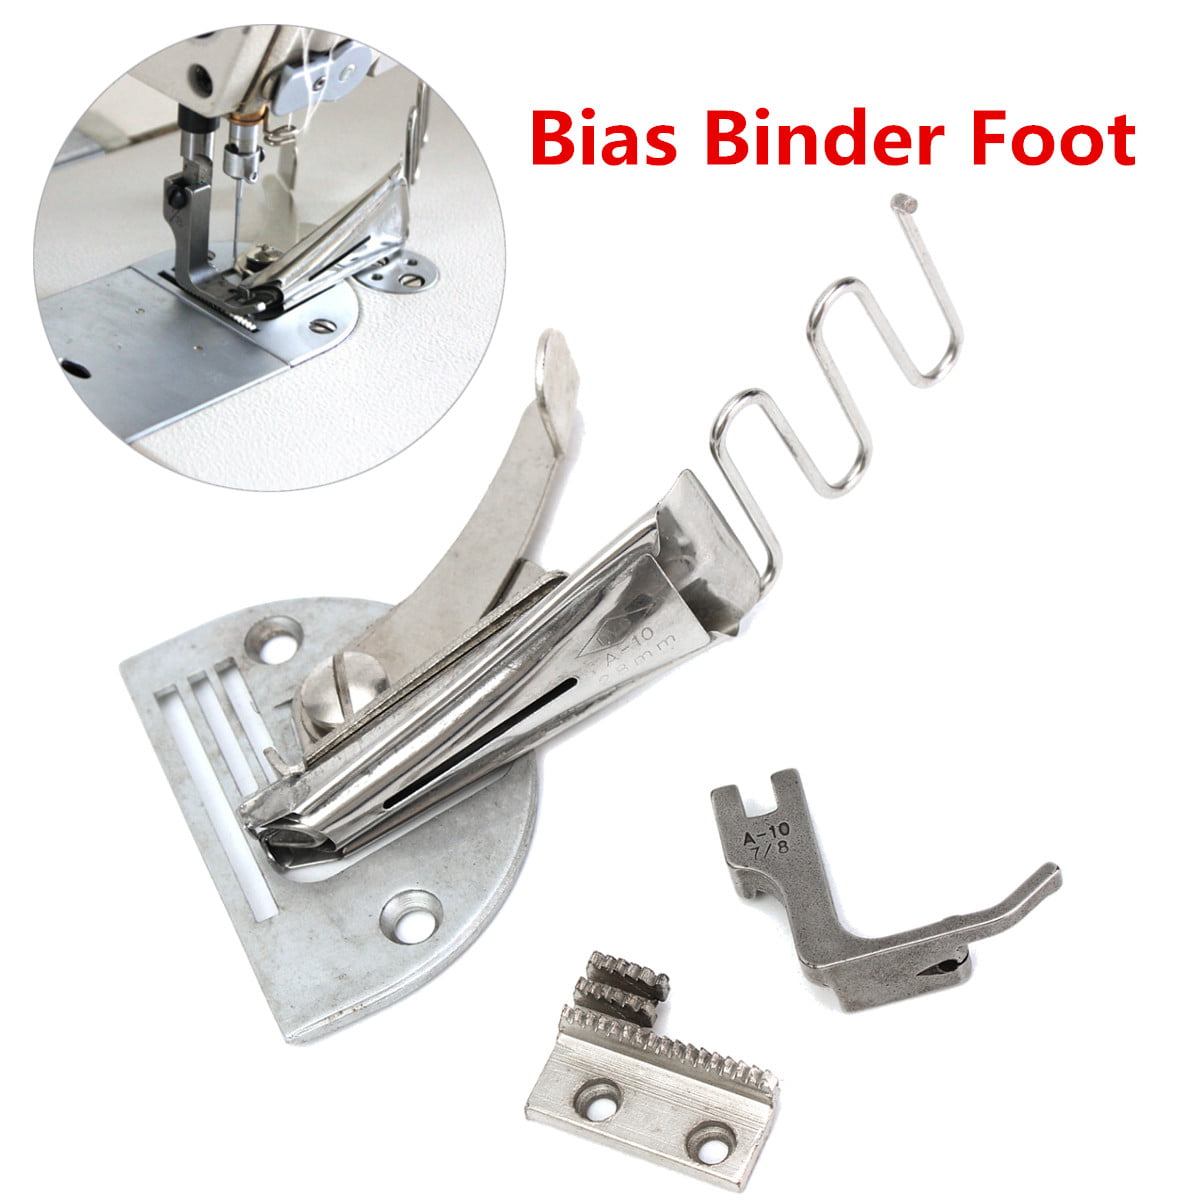 Bias Binder Foot Nähfüße Tape Size 28mm für Brother Singer Nähmaschine Curving 